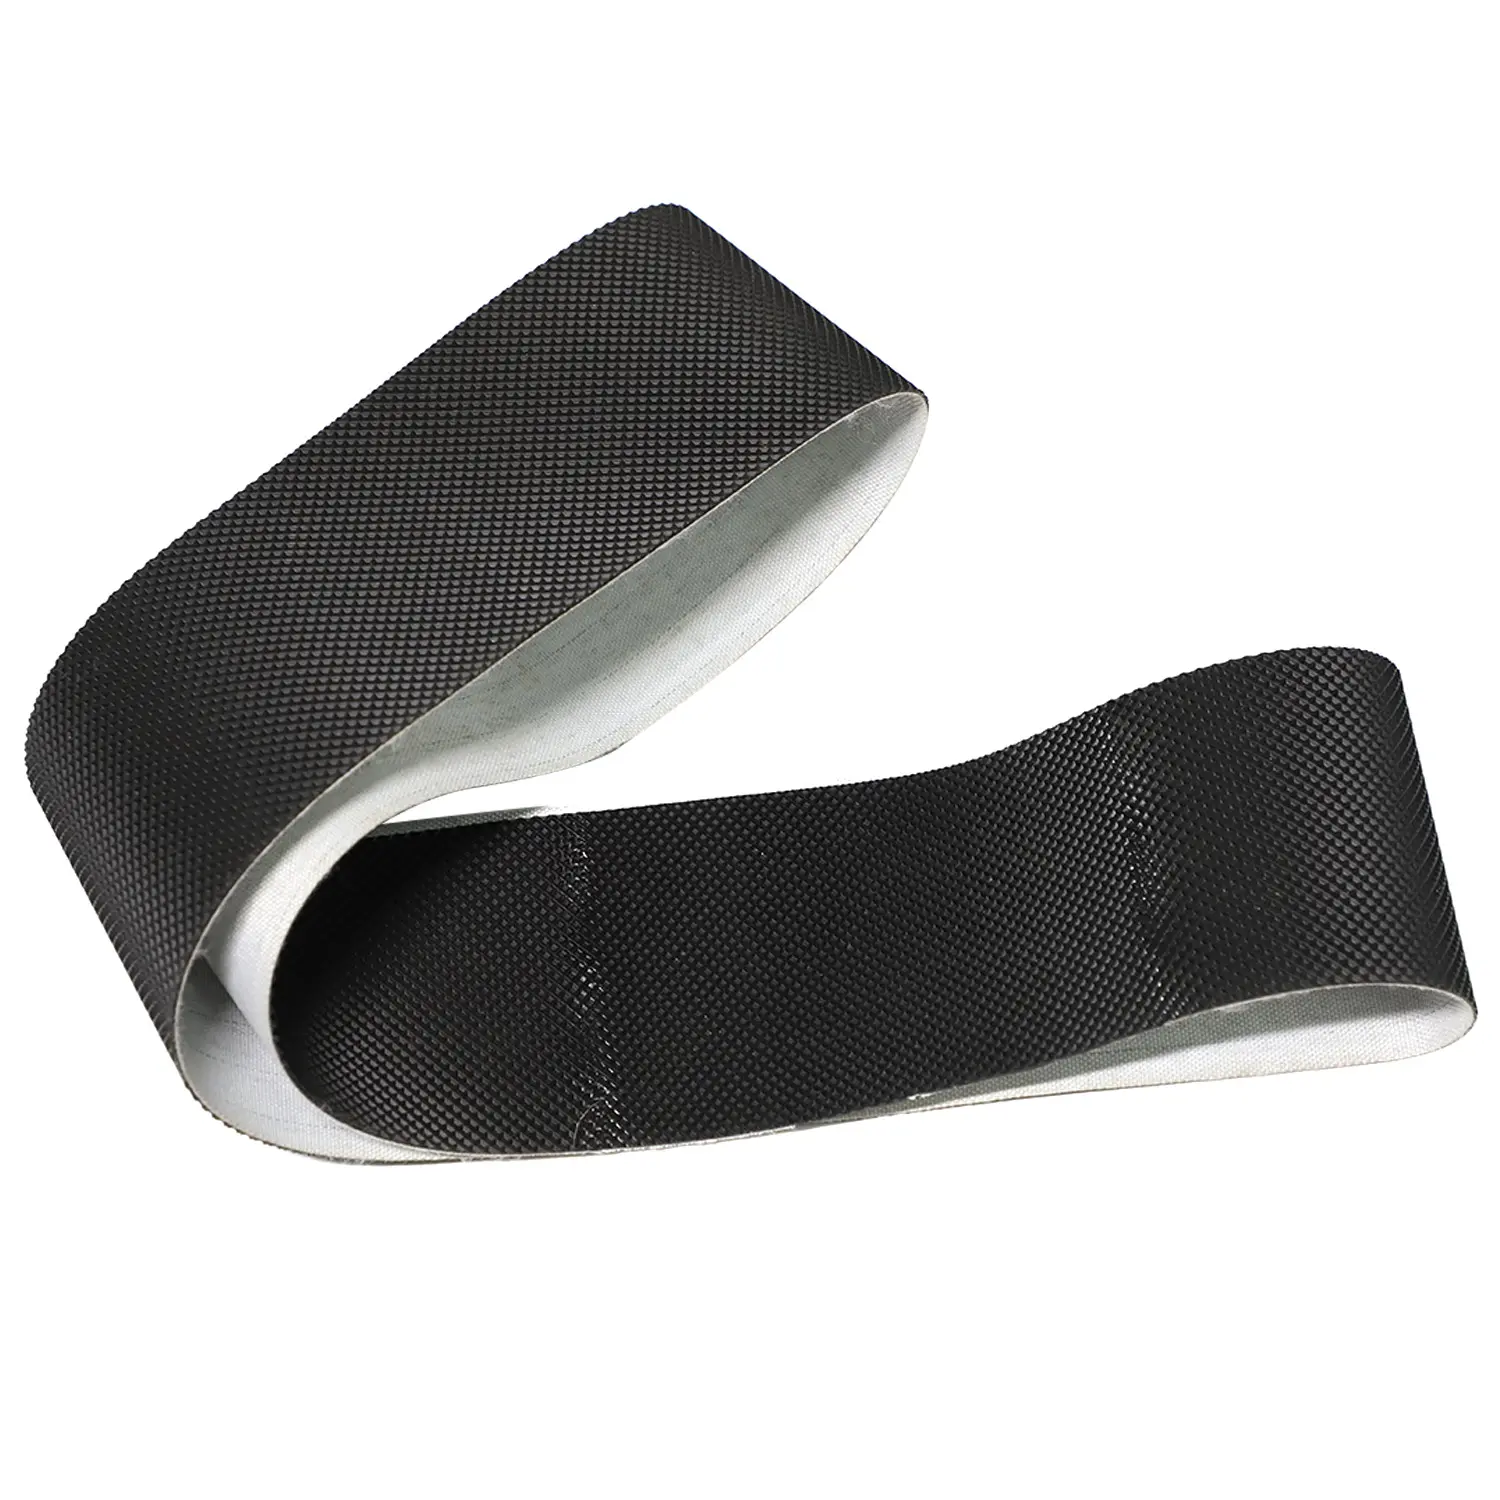 Customized size diamond surface 1.5mm PVC treadmill running belt